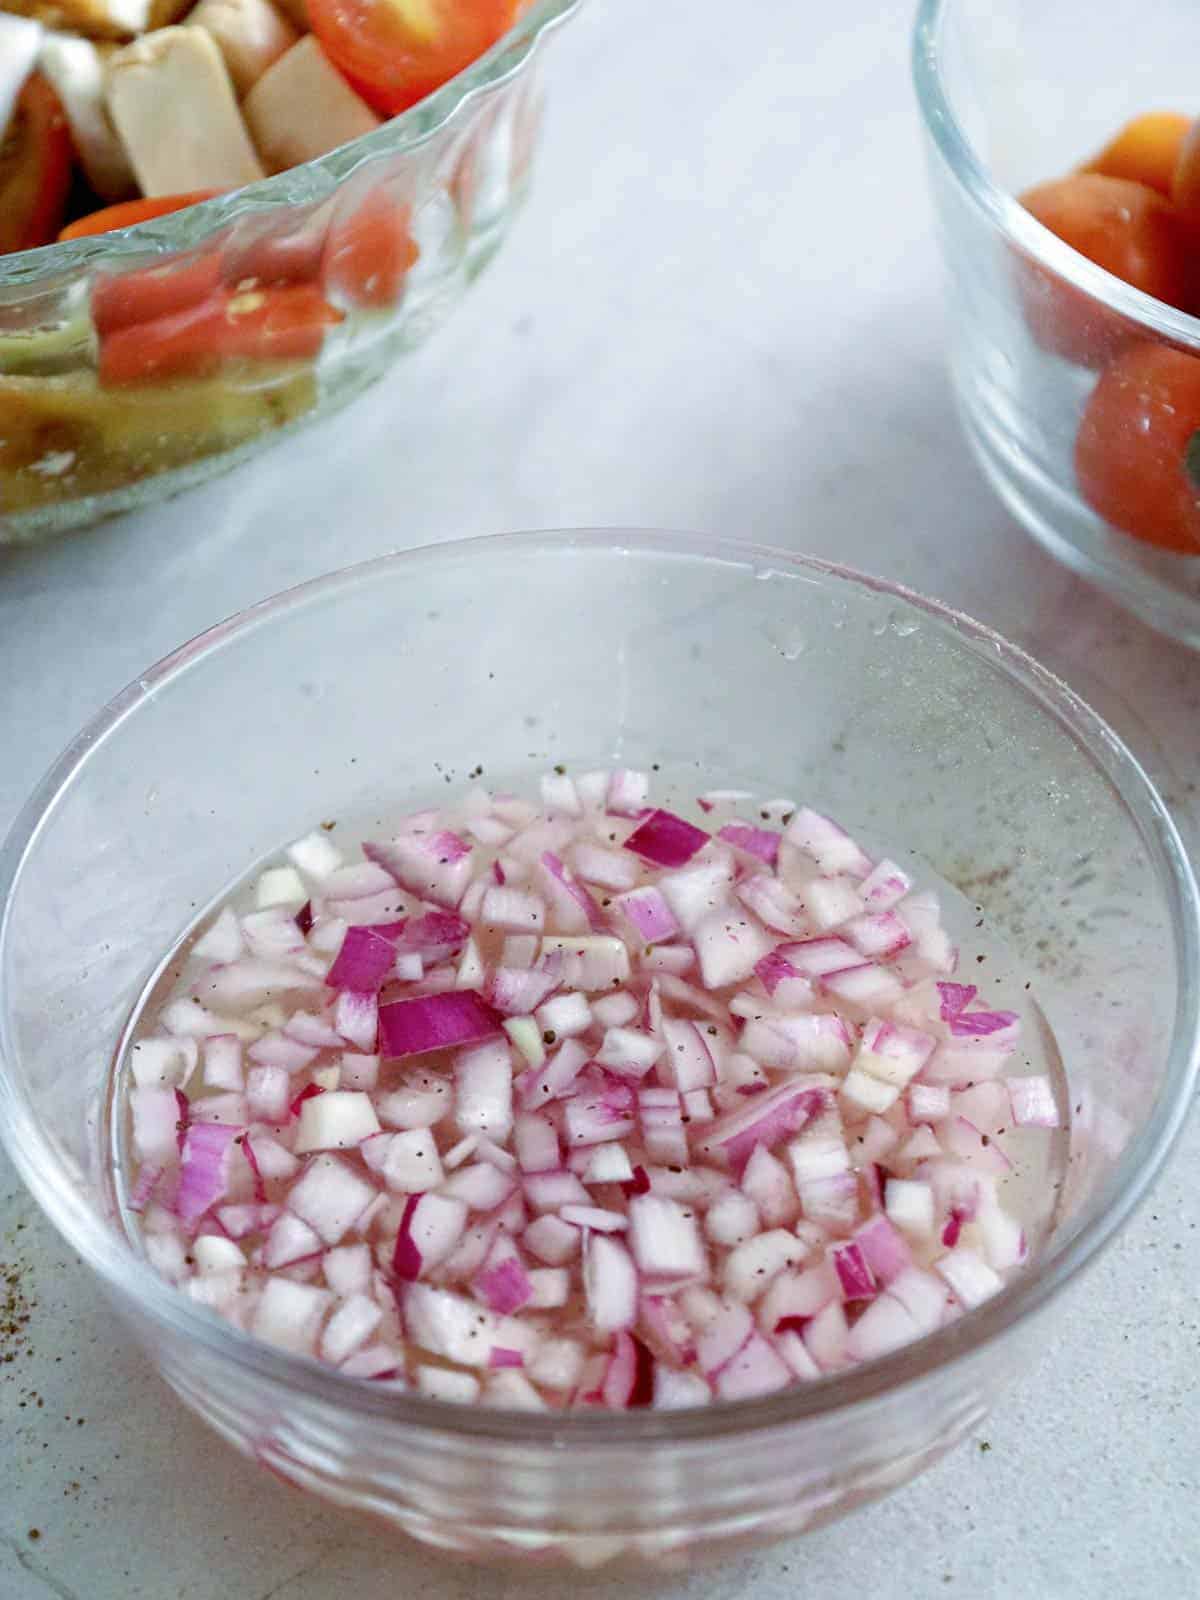 vinegar dressing for ensaladang talong in a clear bowl